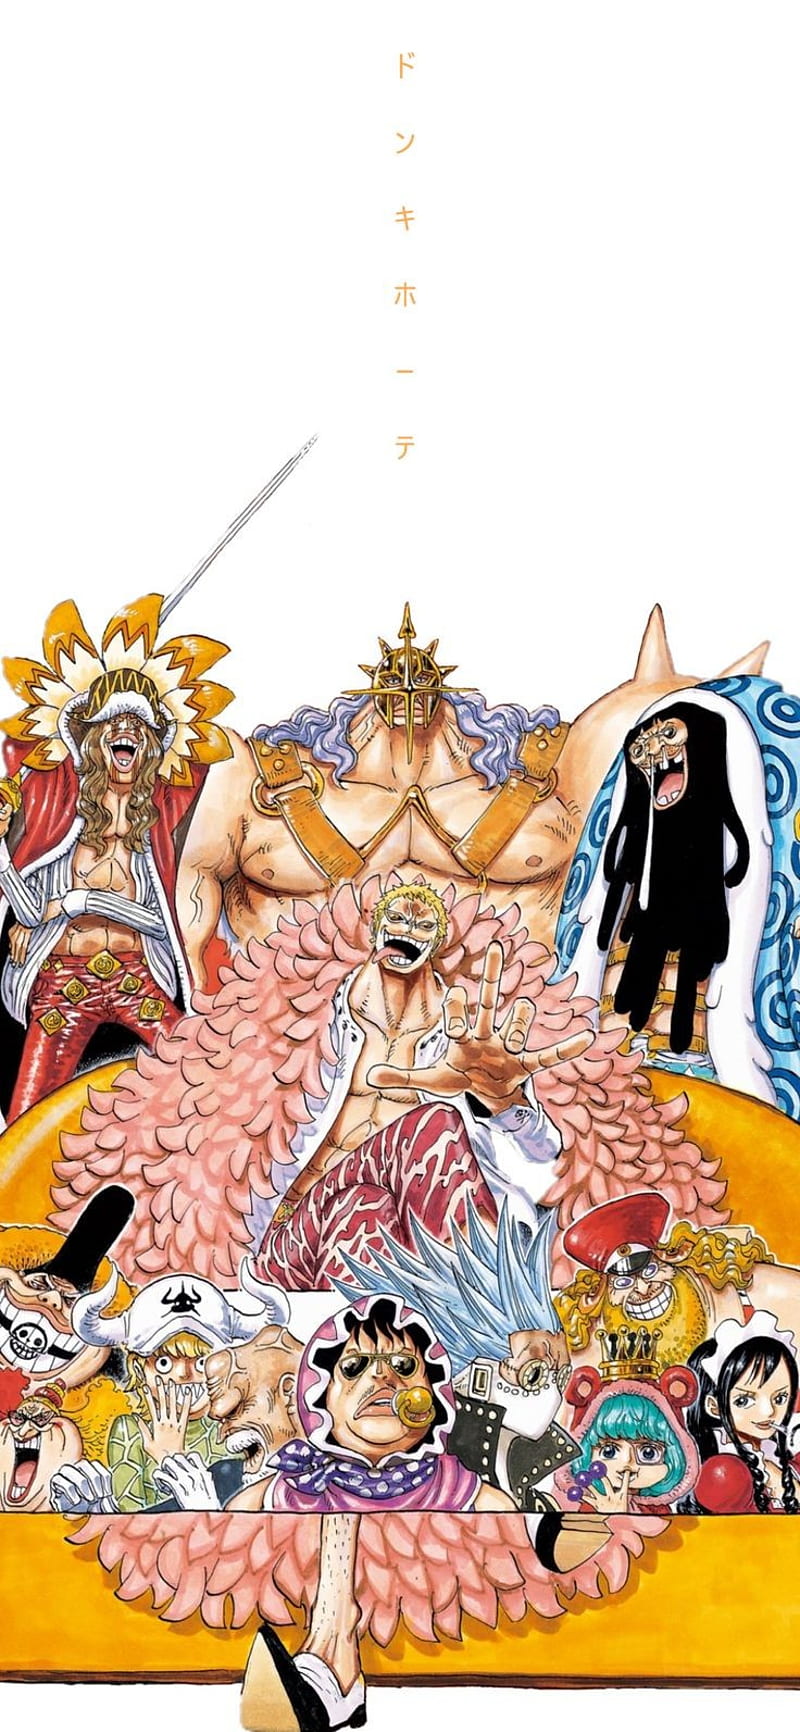 48 One Piece Doflamingo Wallpaper  WallpaperSafari